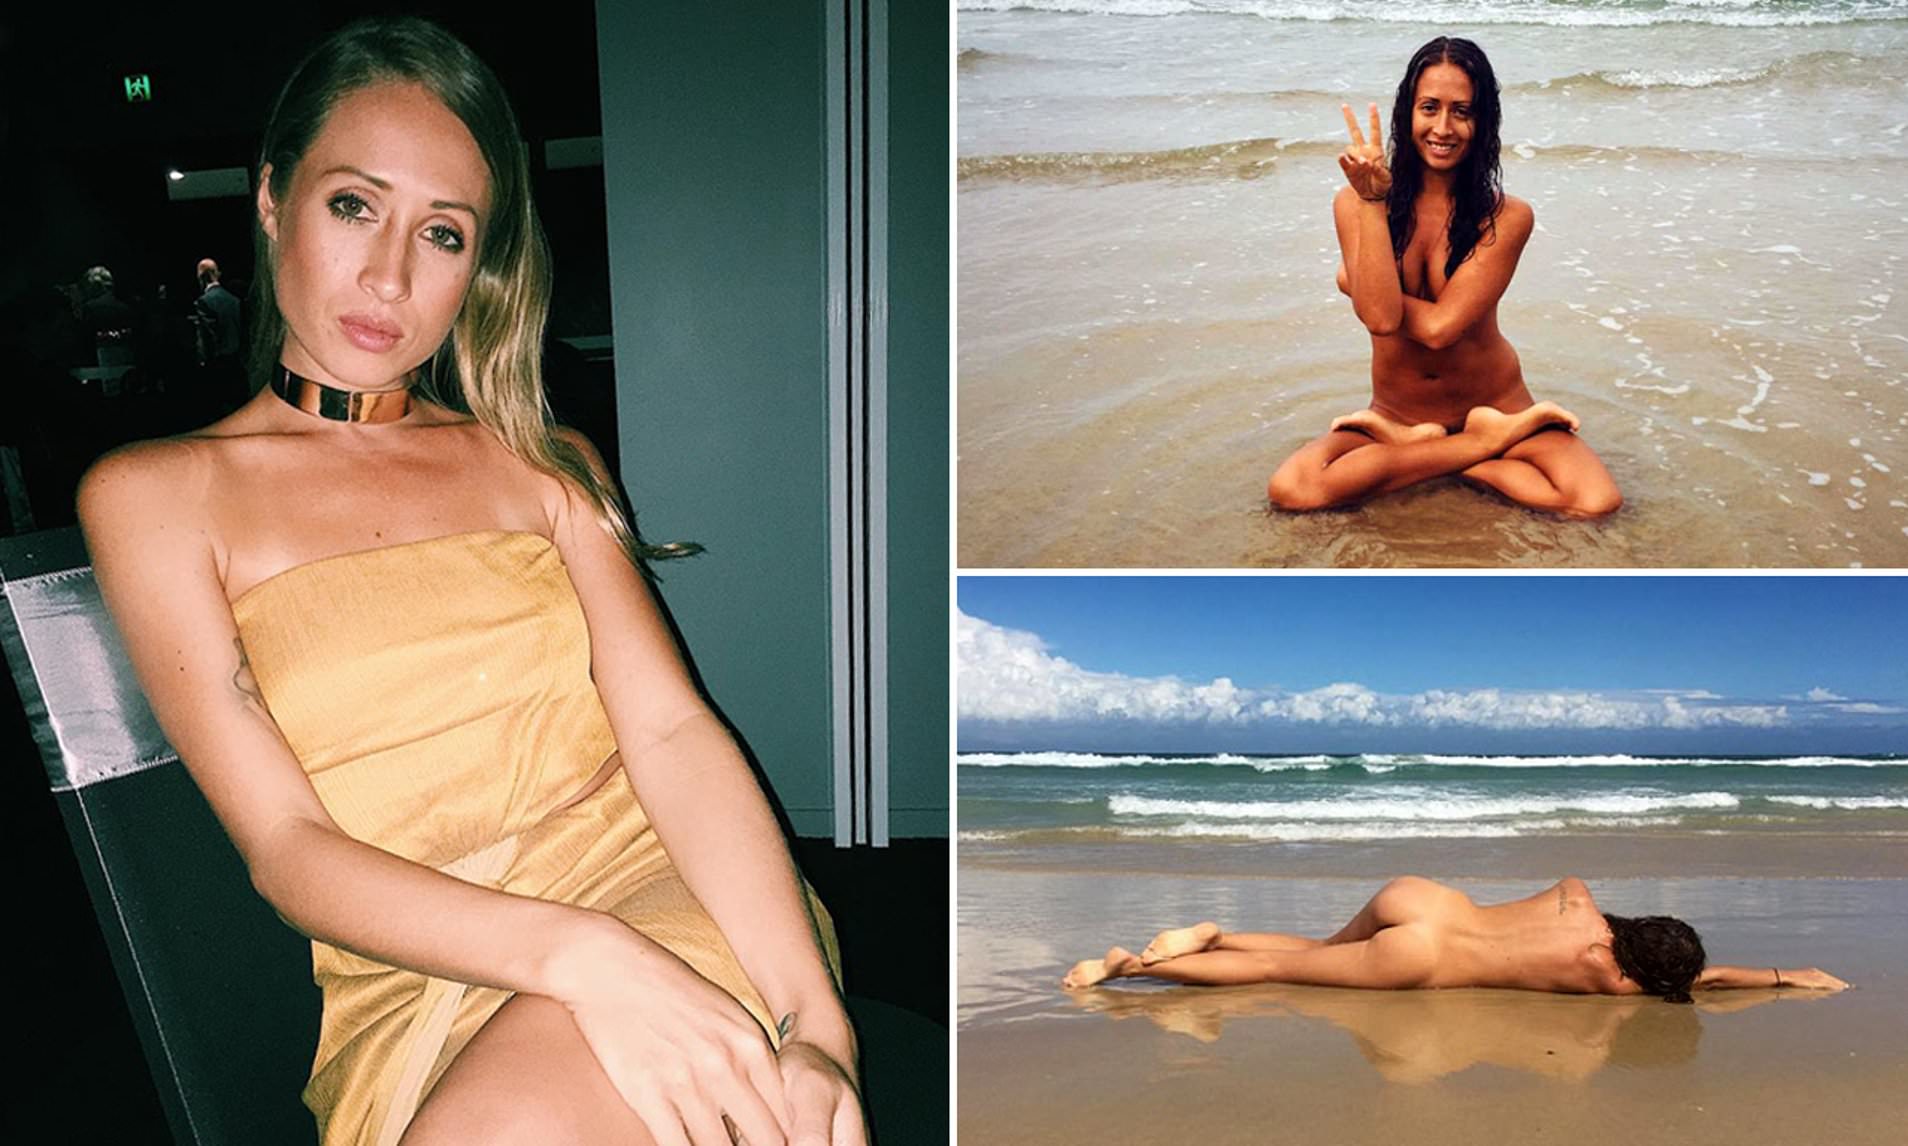 Vintage nudist beach girls nude